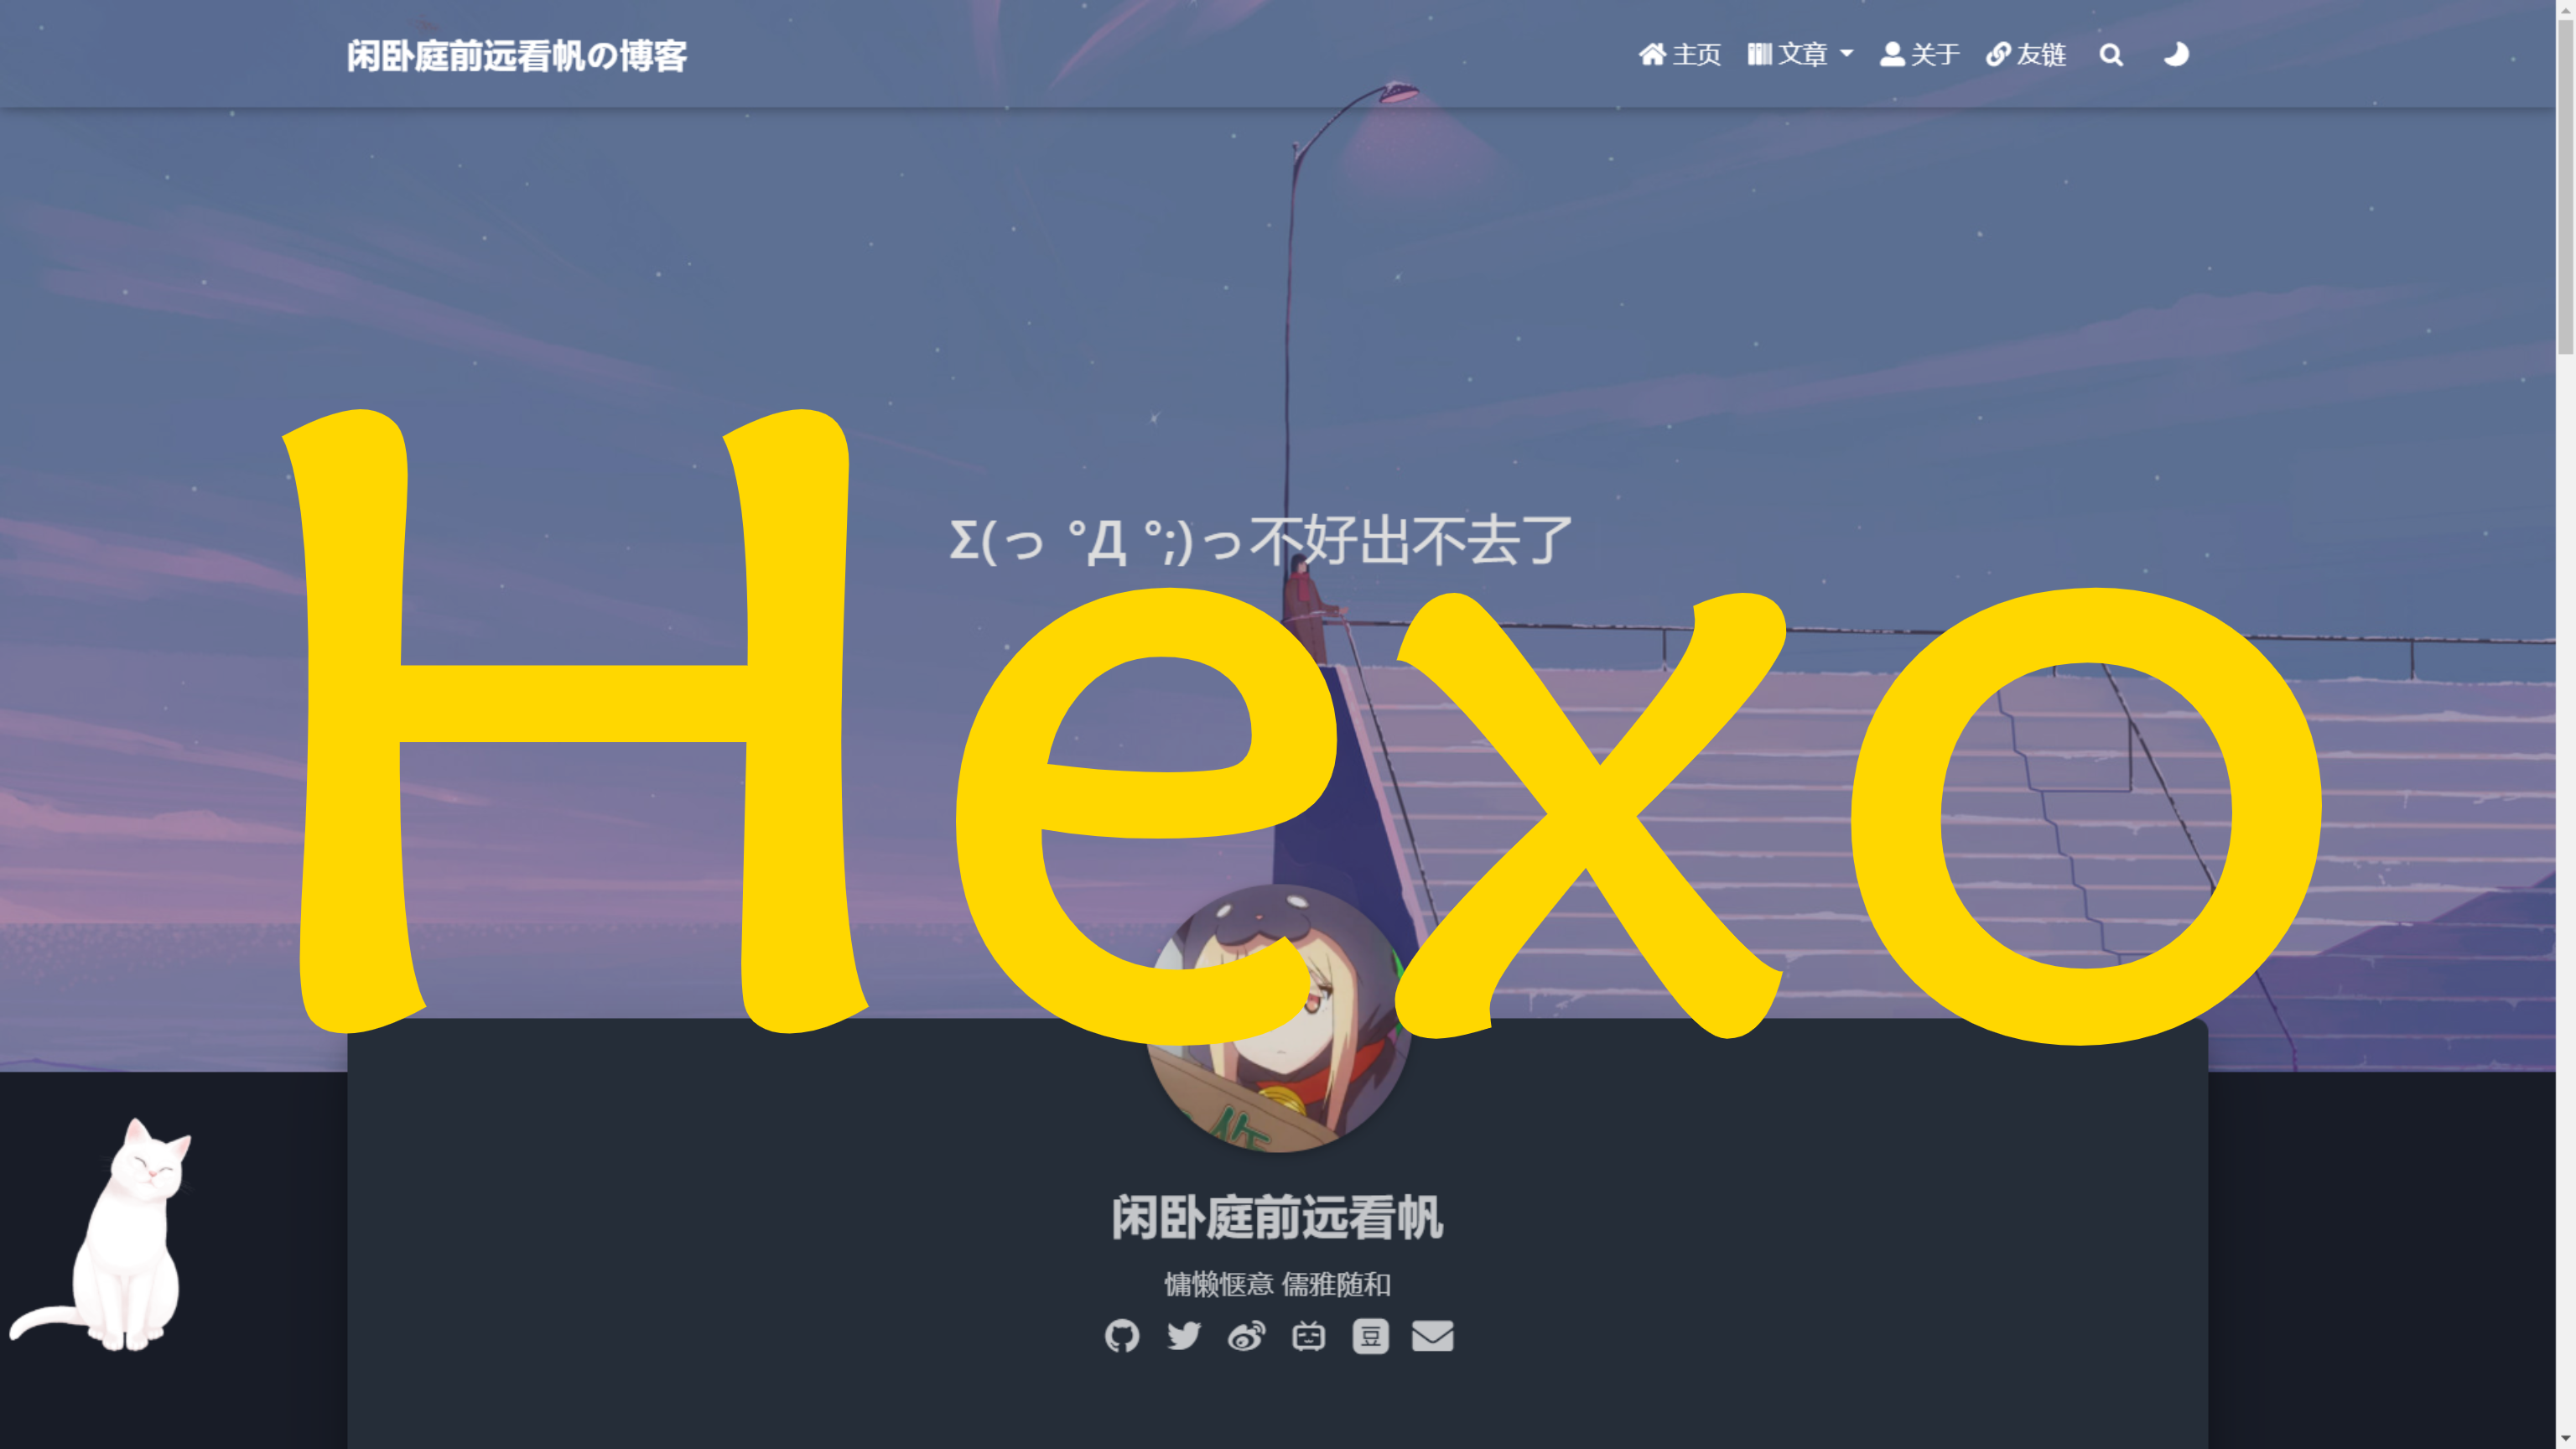 Hello Hexo